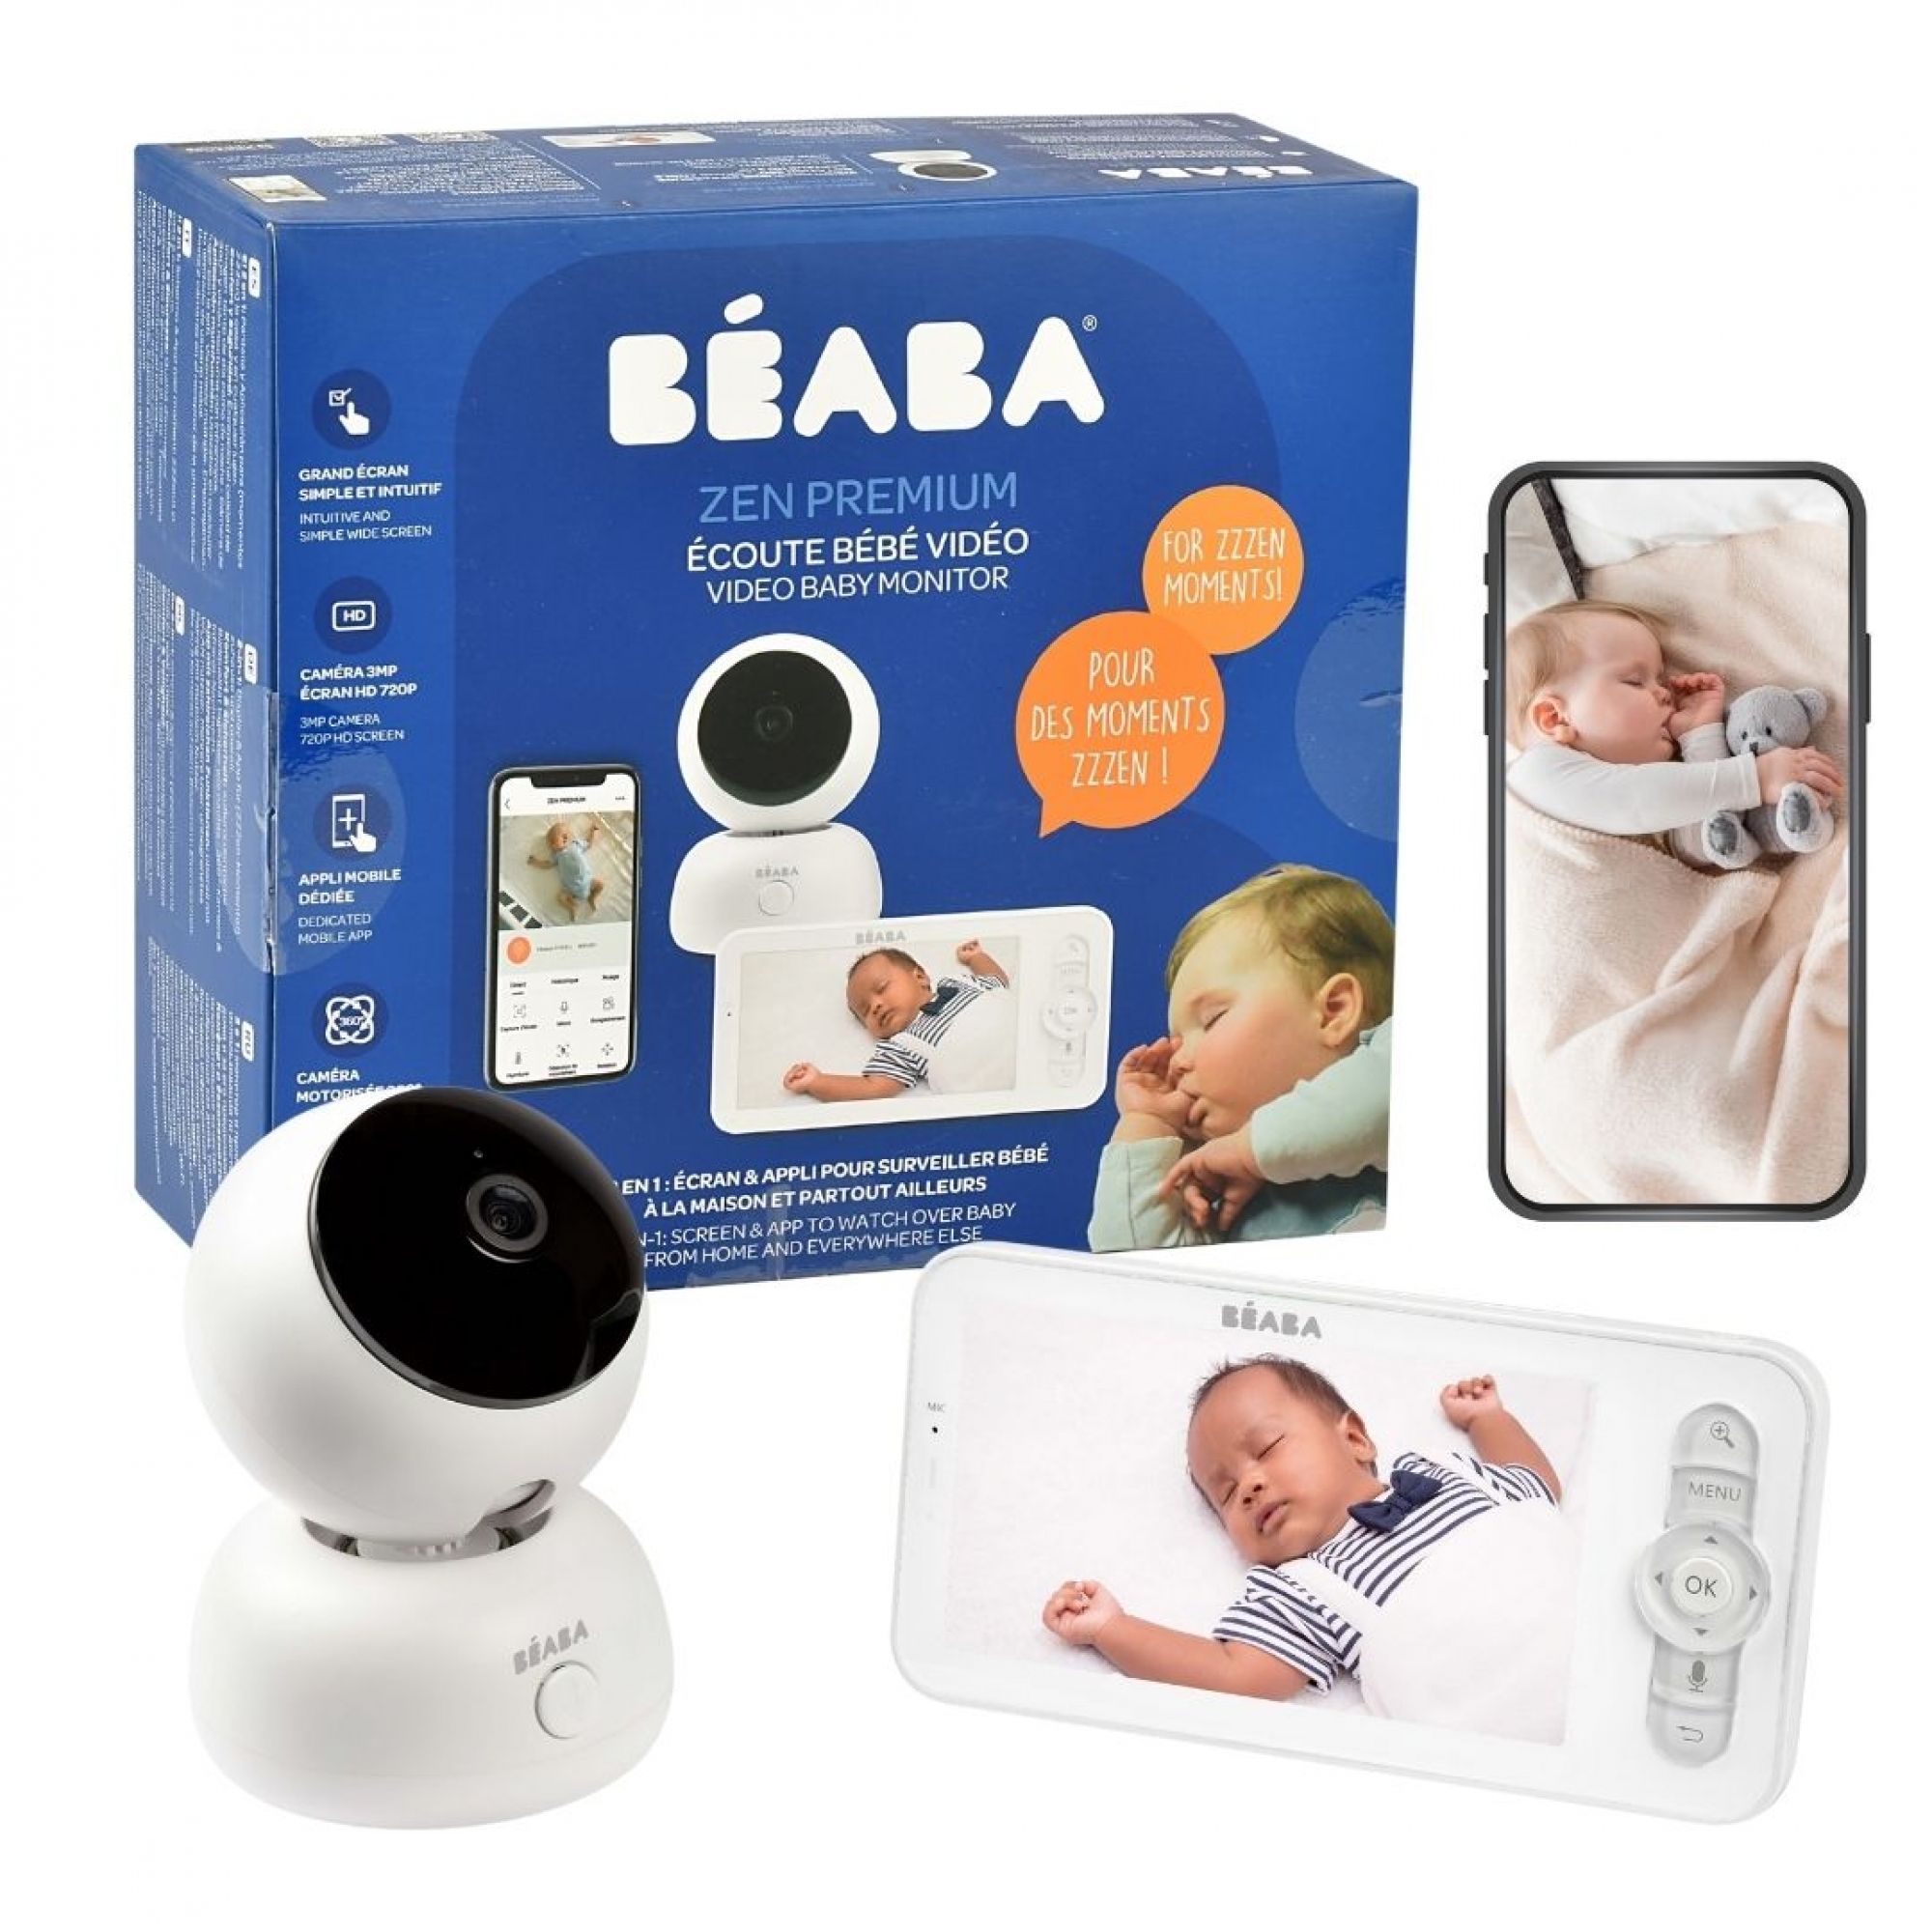 Babyphone vidéo Zen Premium : Béaba - Berceau Magique